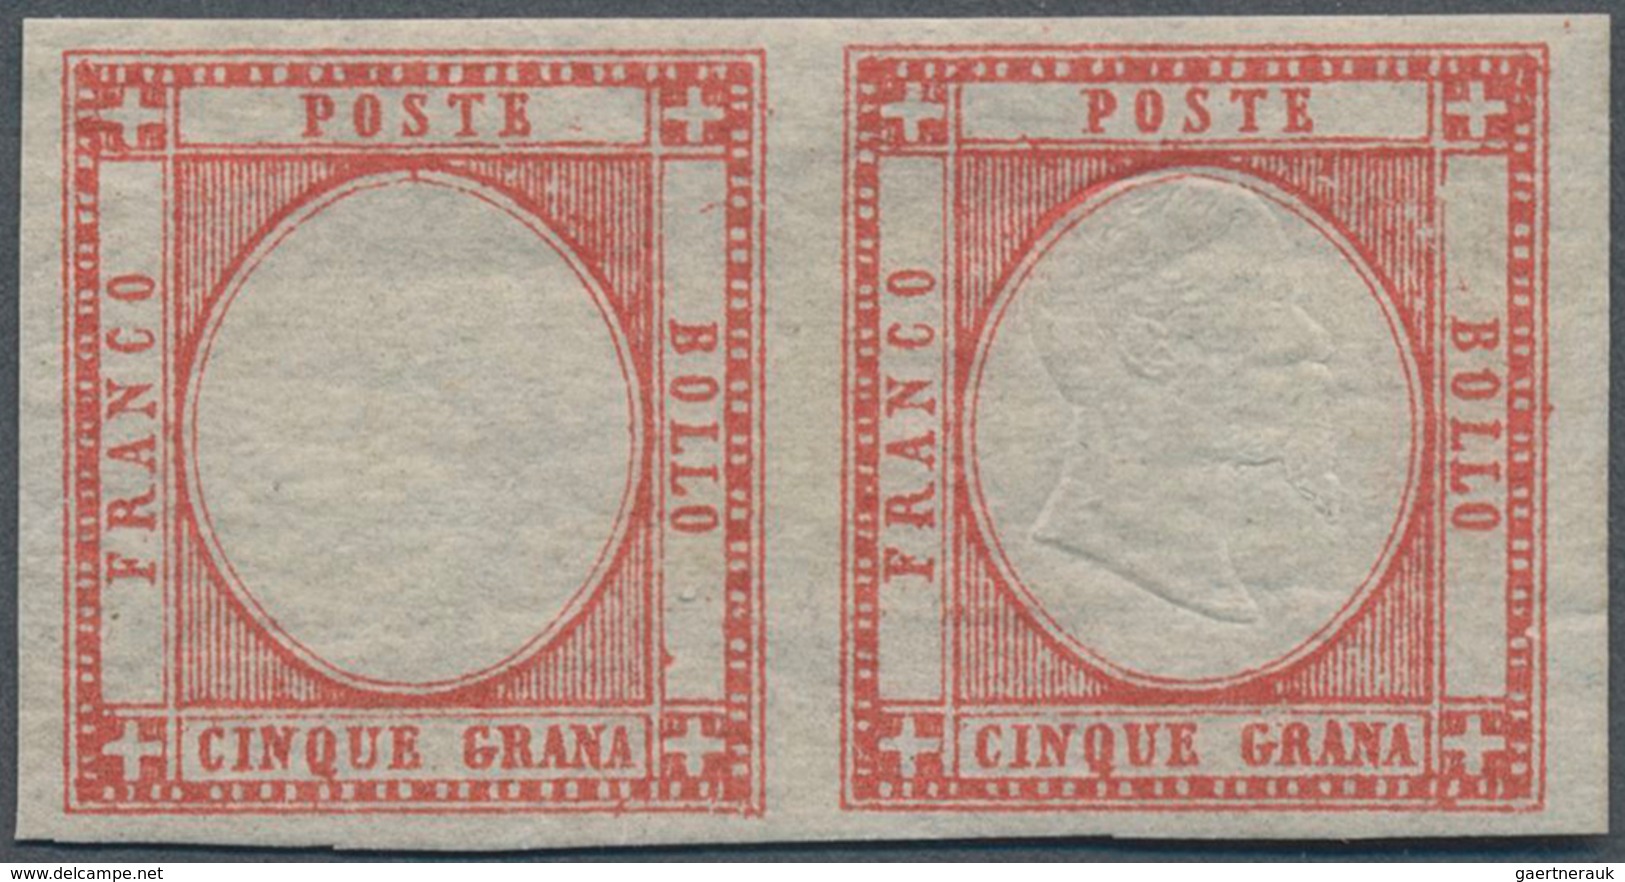 Italien: 1861, Neapolitan Province, 5gr. Rose Carmine, Horizontal Pair, Fresh Colour And Good Margin - Mint/hinged